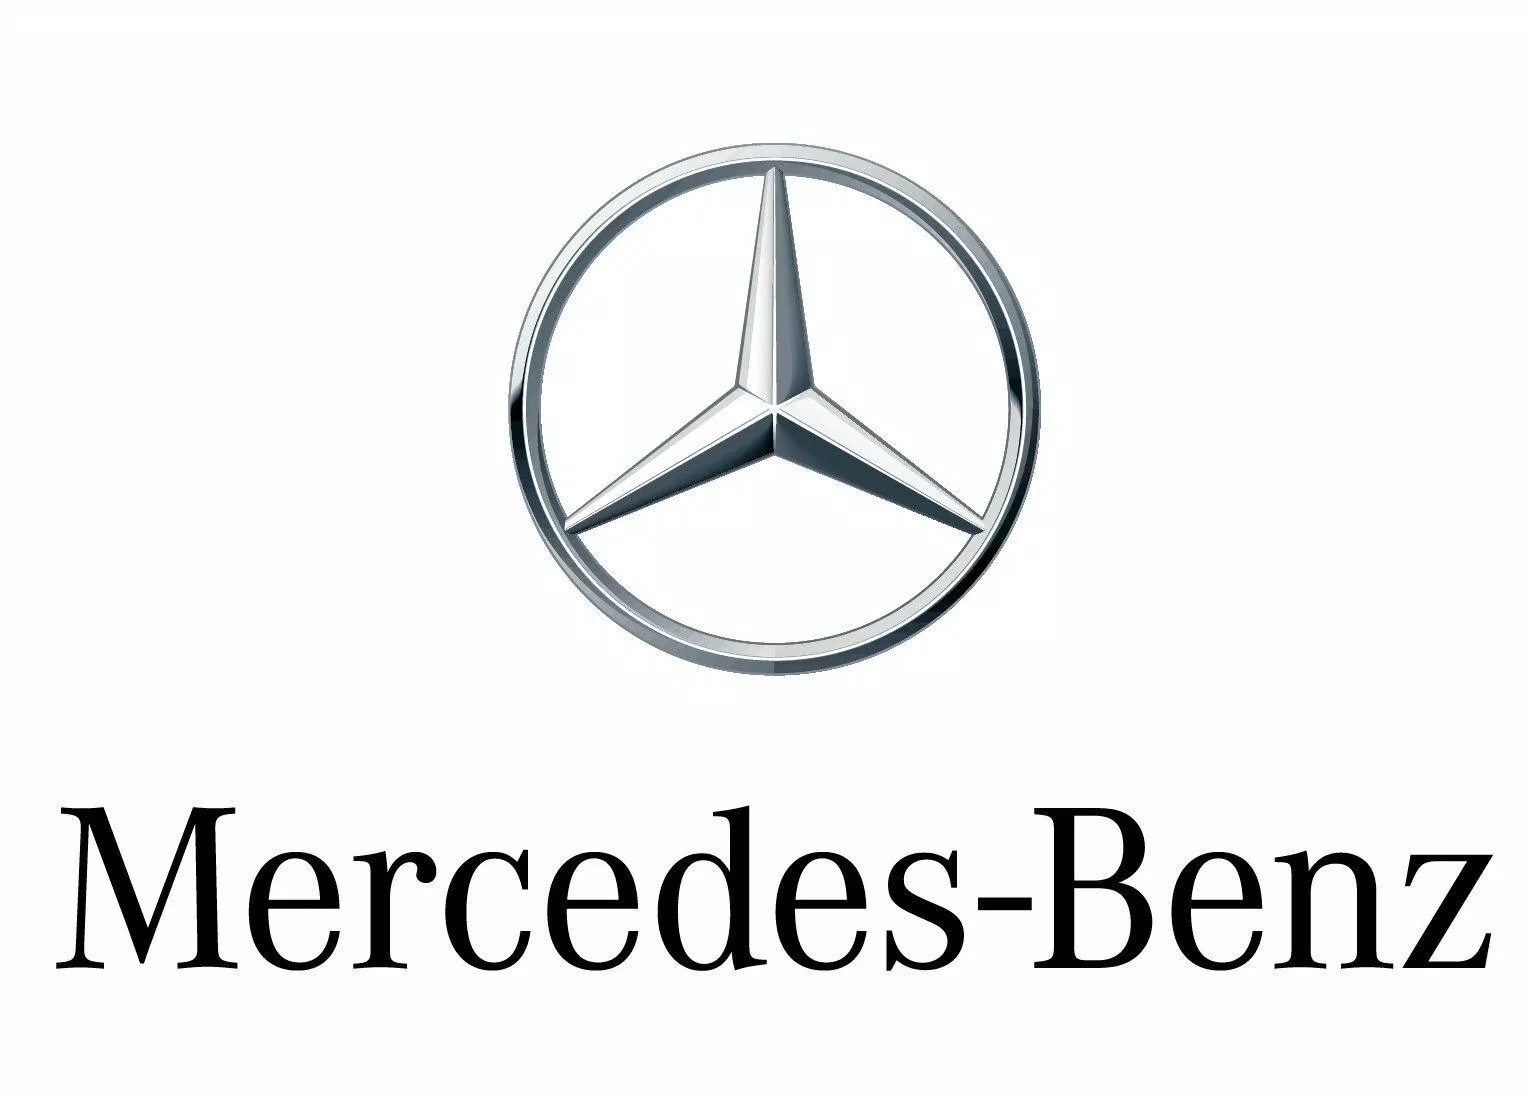 Hãng Mercedes-Benz (Ảnh: Internet)